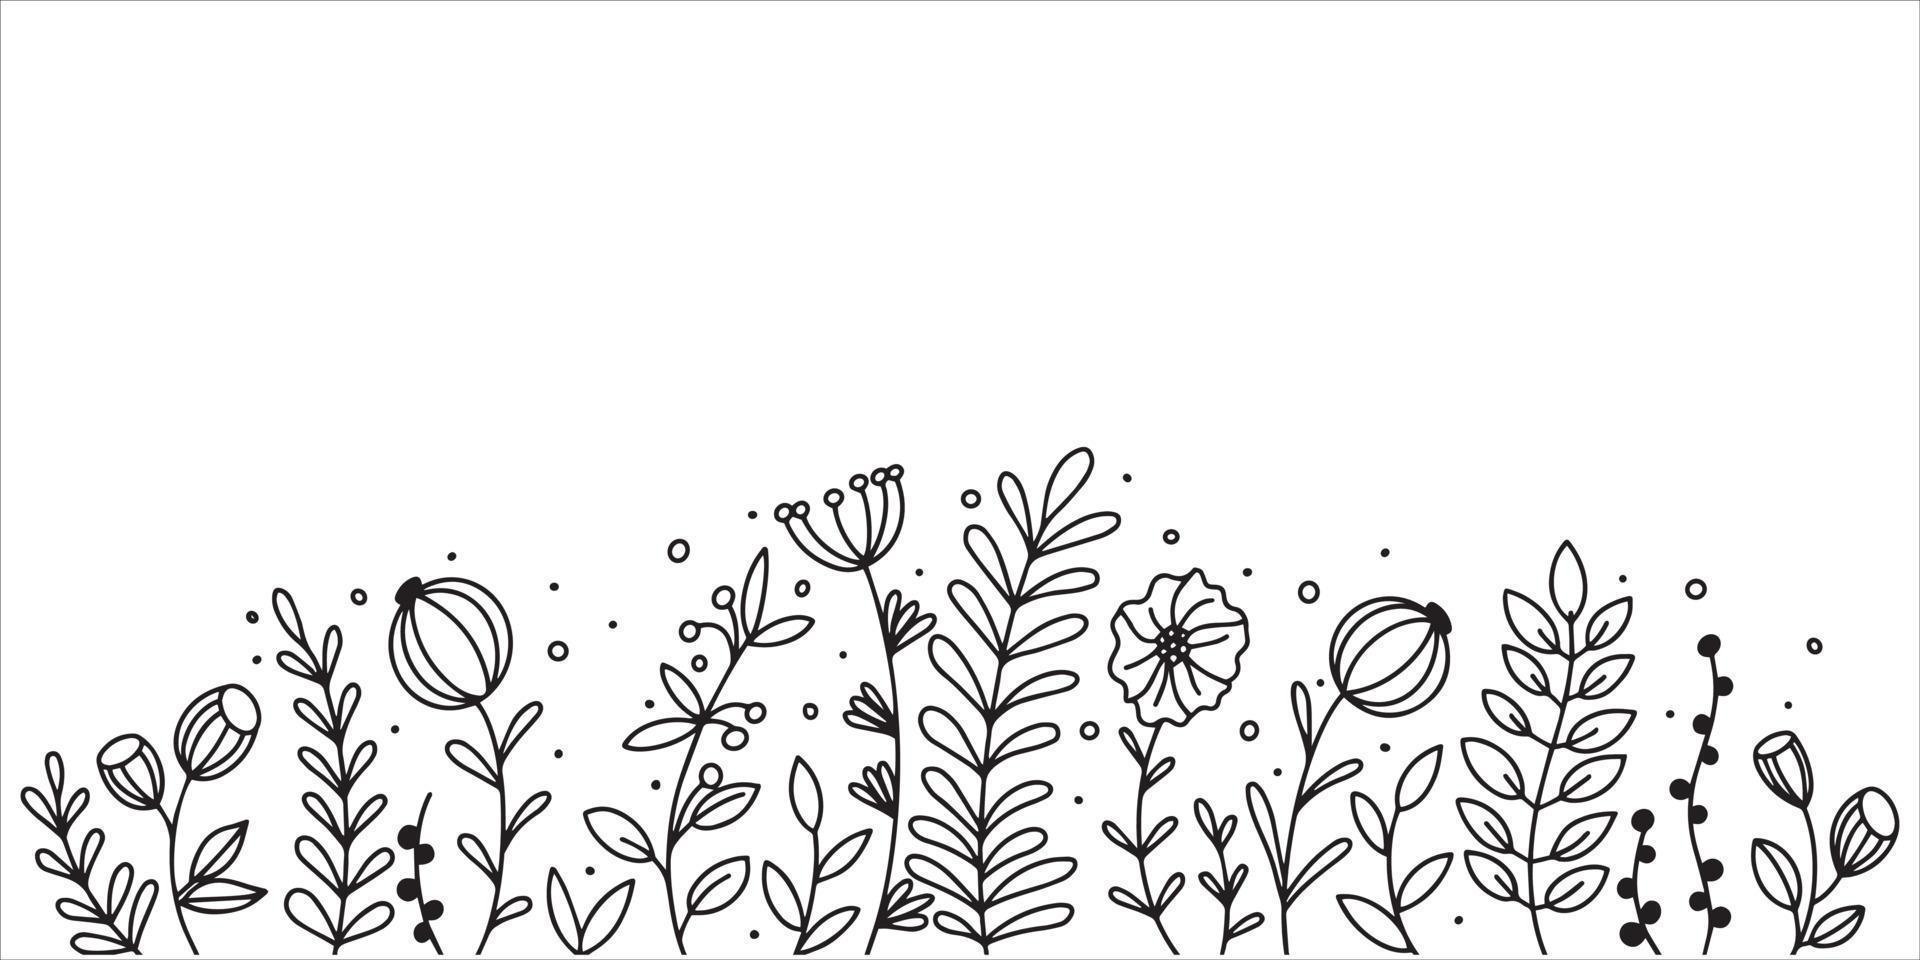 vektor illustration i doodle stil. enkel linje ritade vilda blommor, grafisk svartvit ritning, kant, ram. abstrakta blommor, löv, grenar